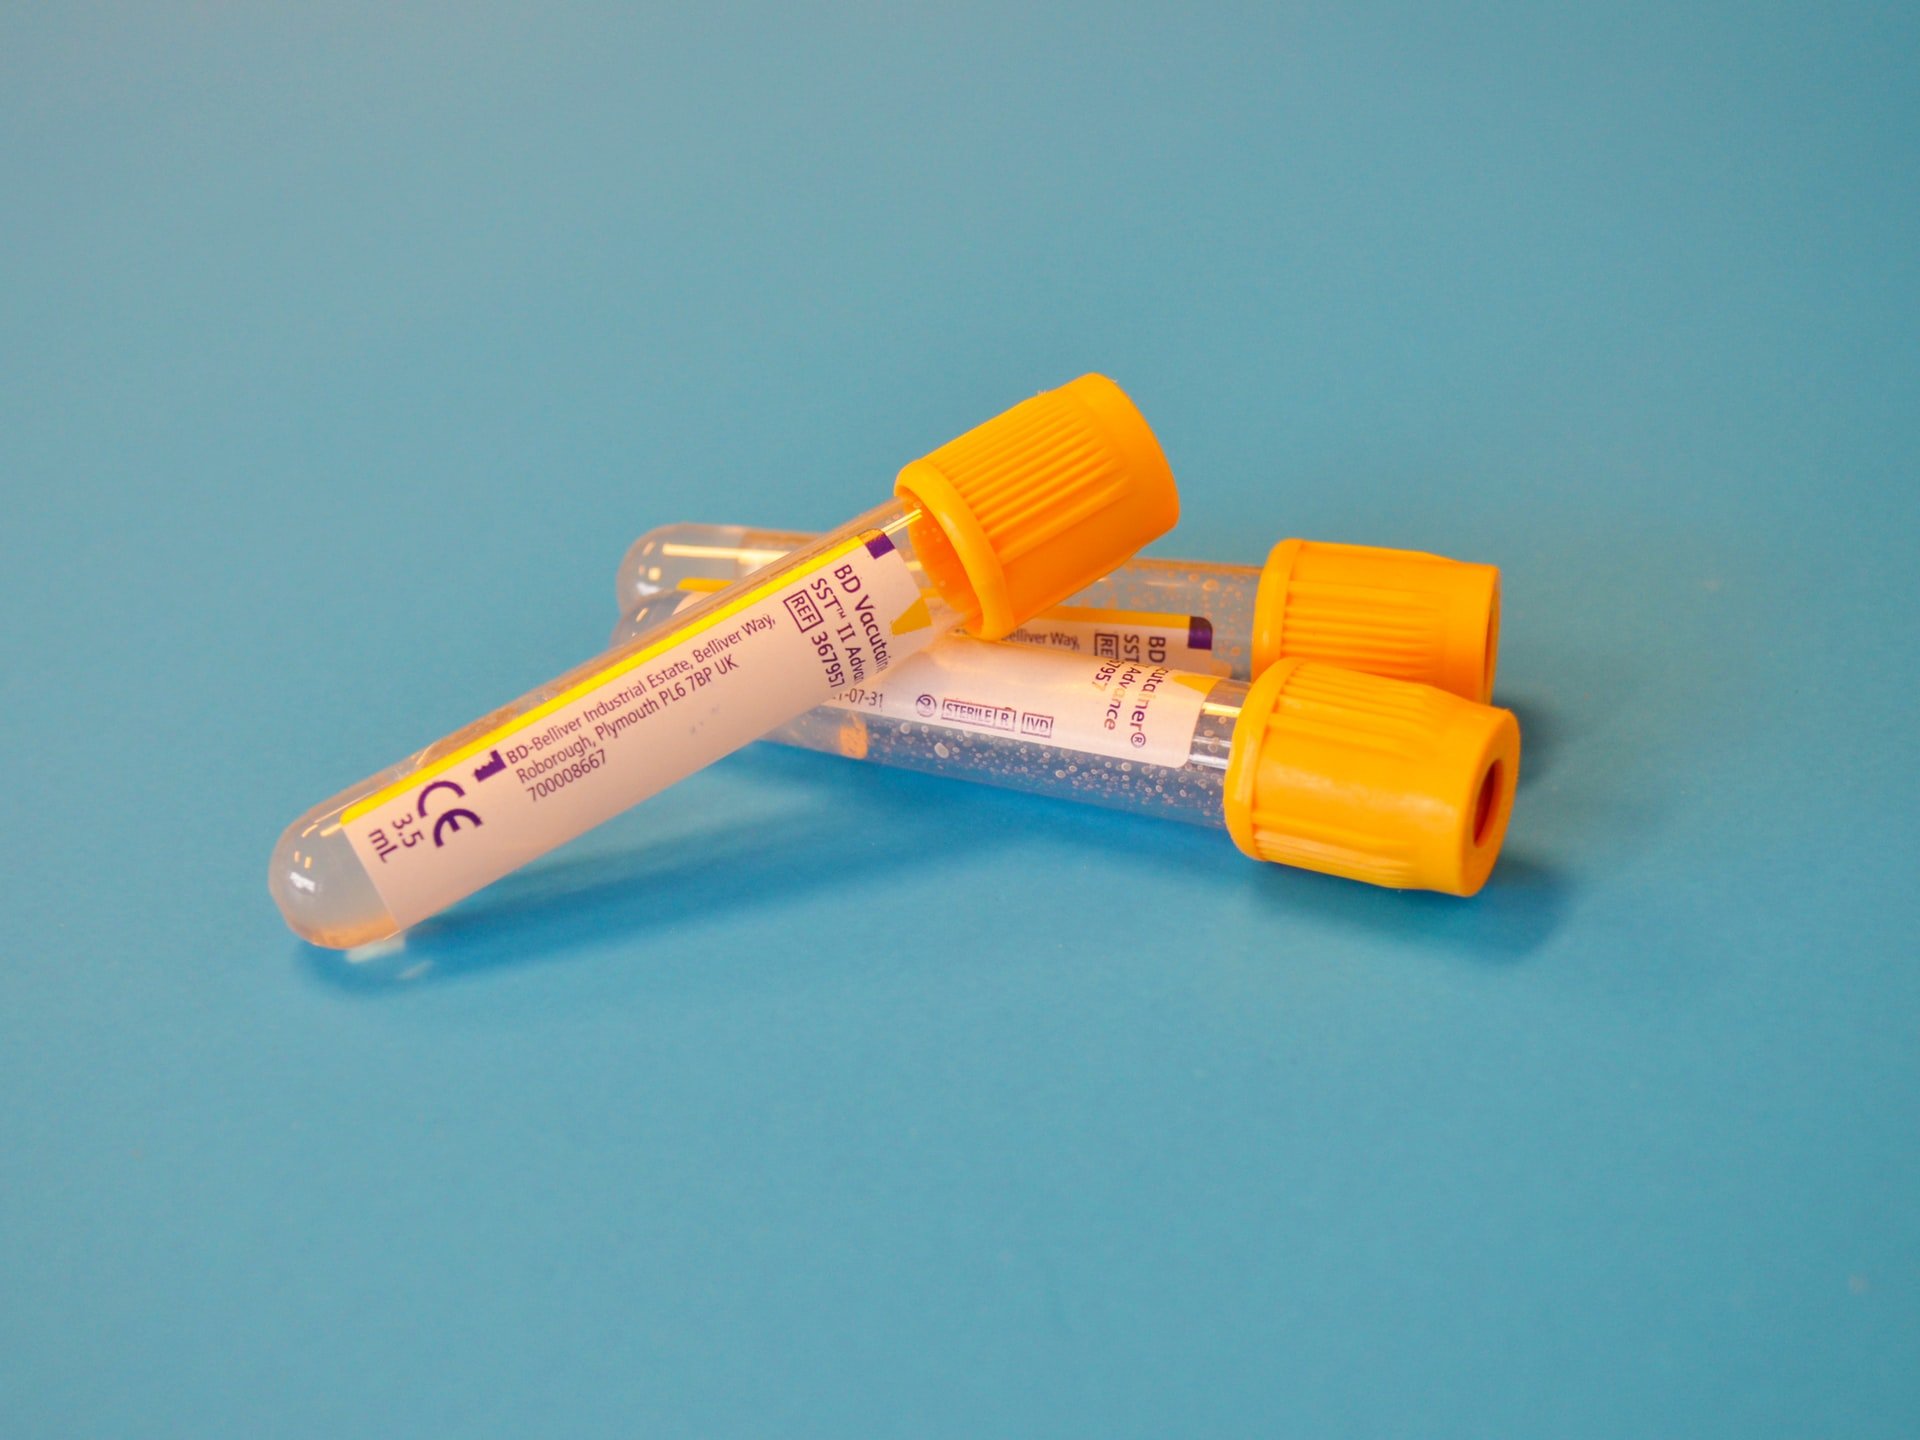 White test tubes with orange caps  | Source: Unsplash